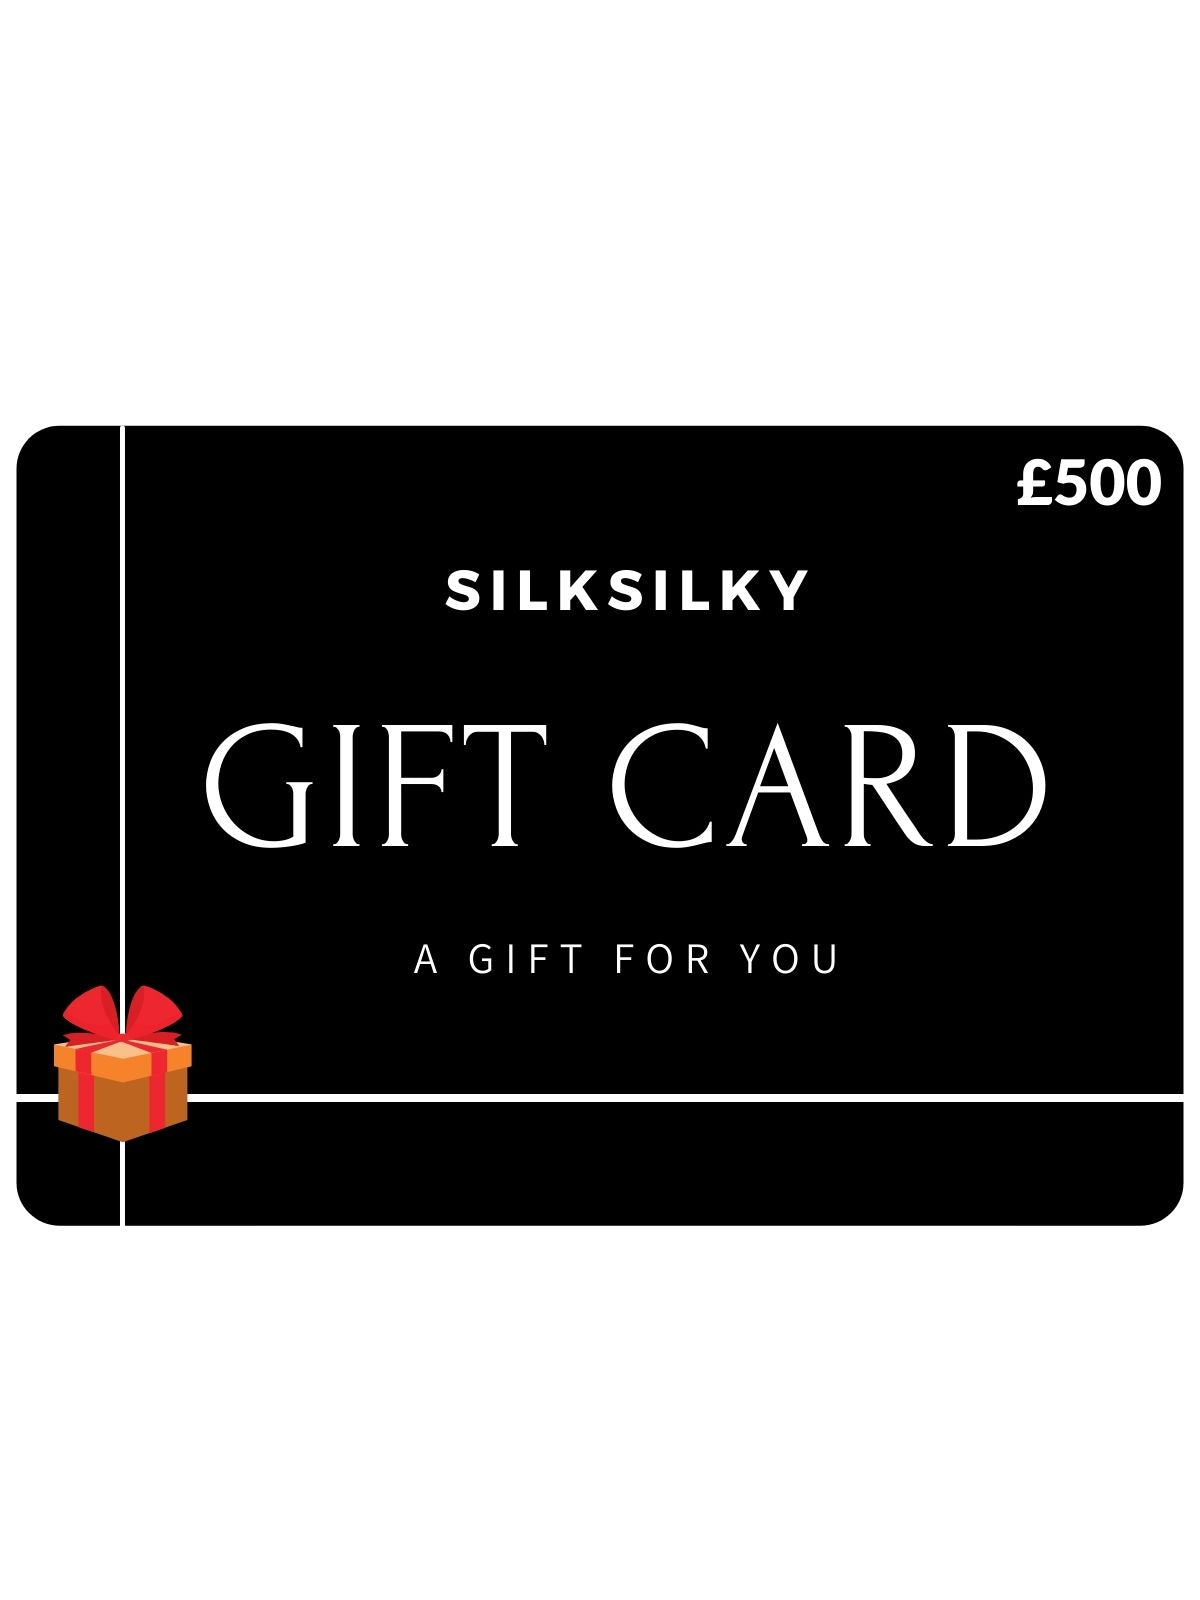 SilkSilky Gift Card￡50 - ￡500